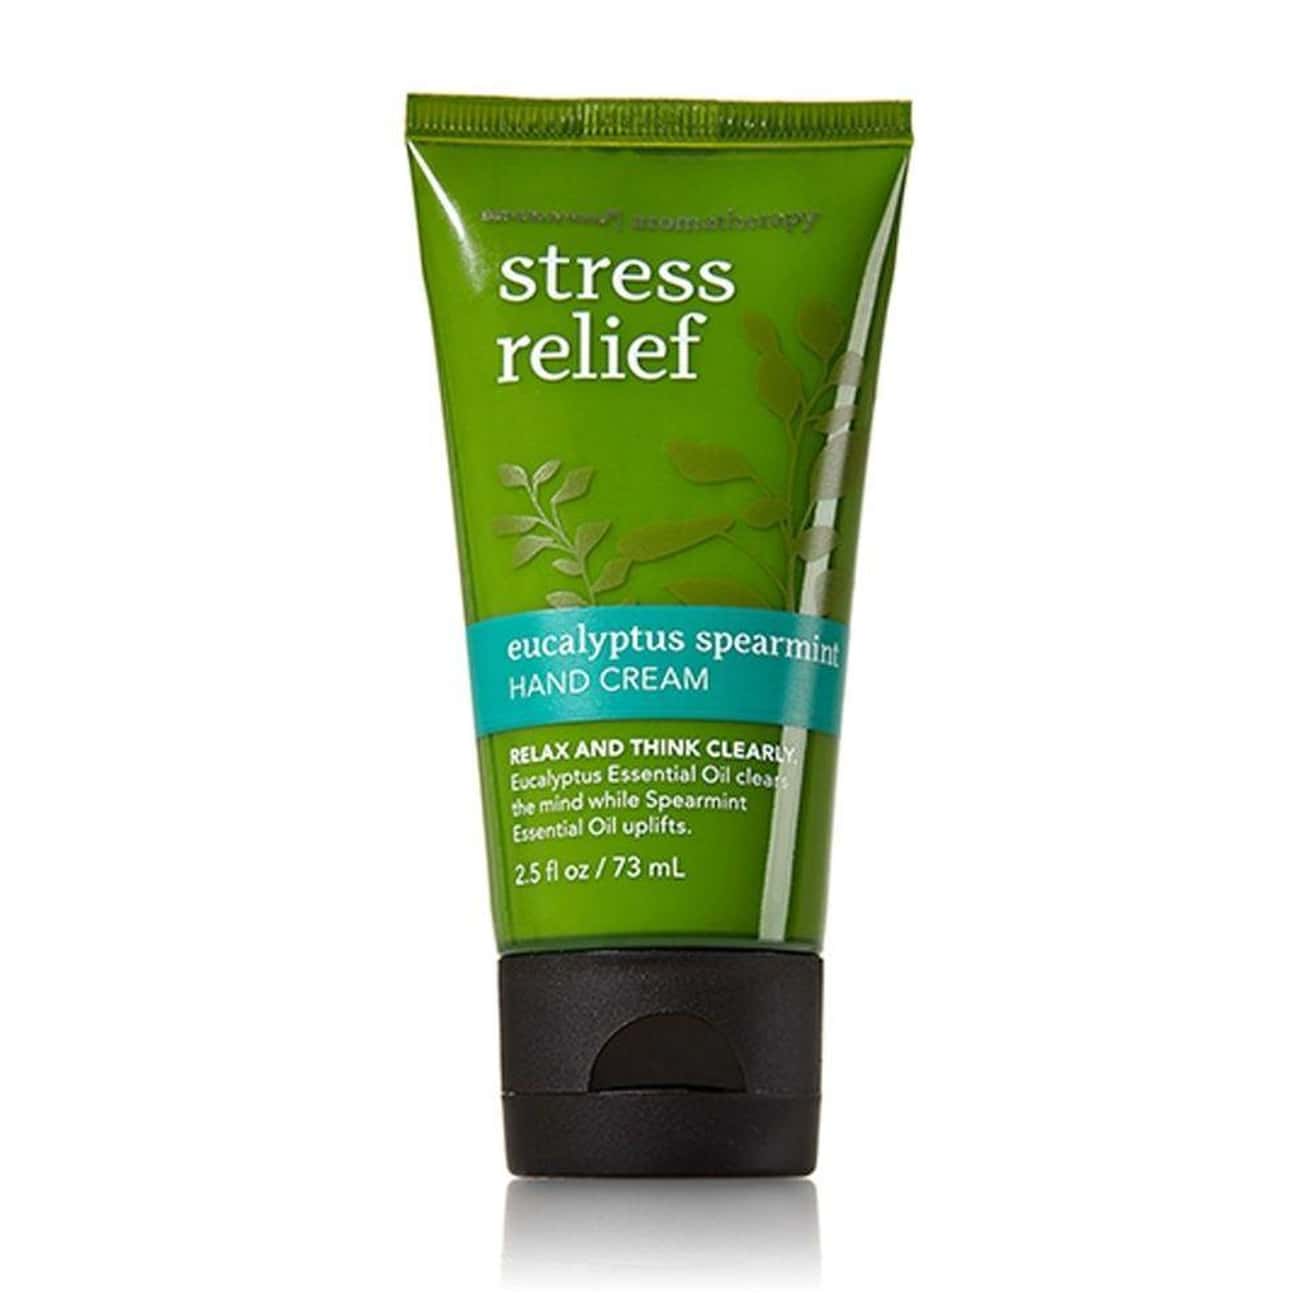 Bath & Body Works Stress Relief Eucalyptus And Spearmint Hand Cream